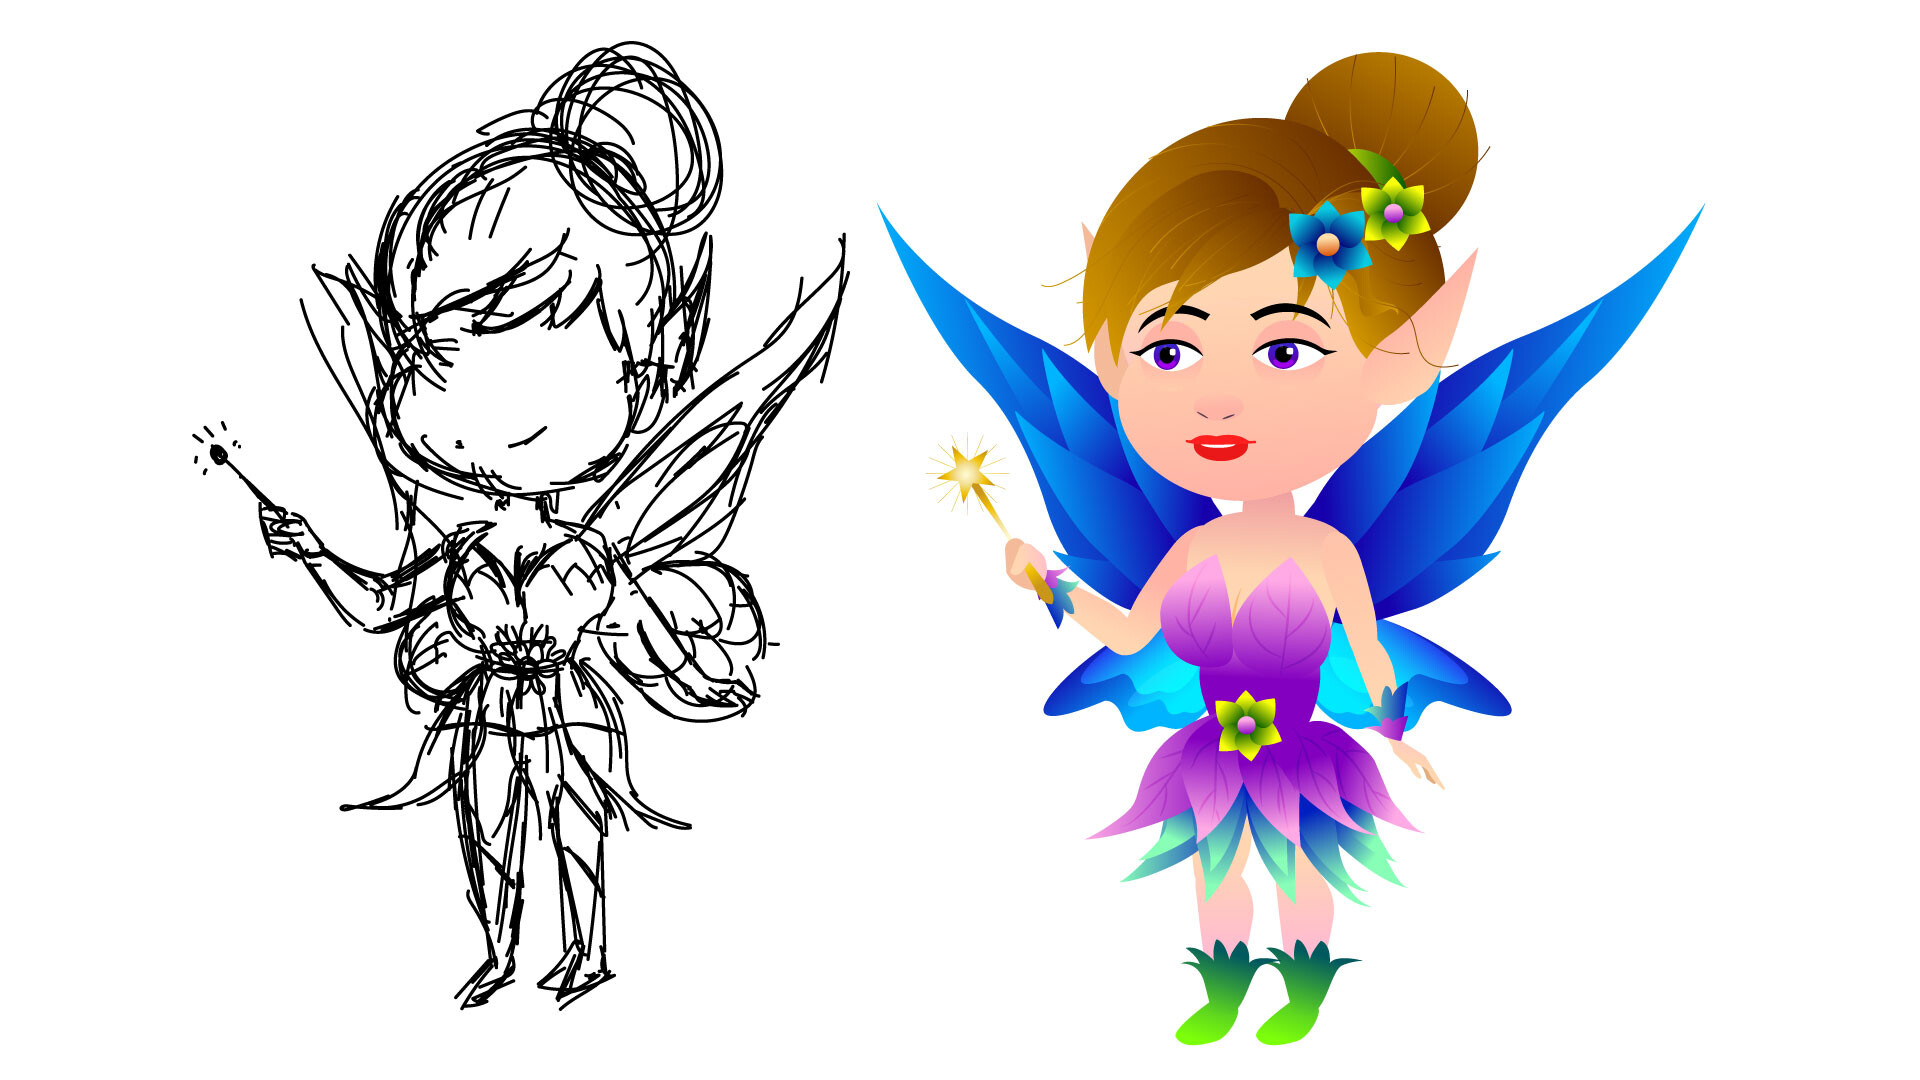 ArtStation - Fairy character design tutorial in Adobe illustrator